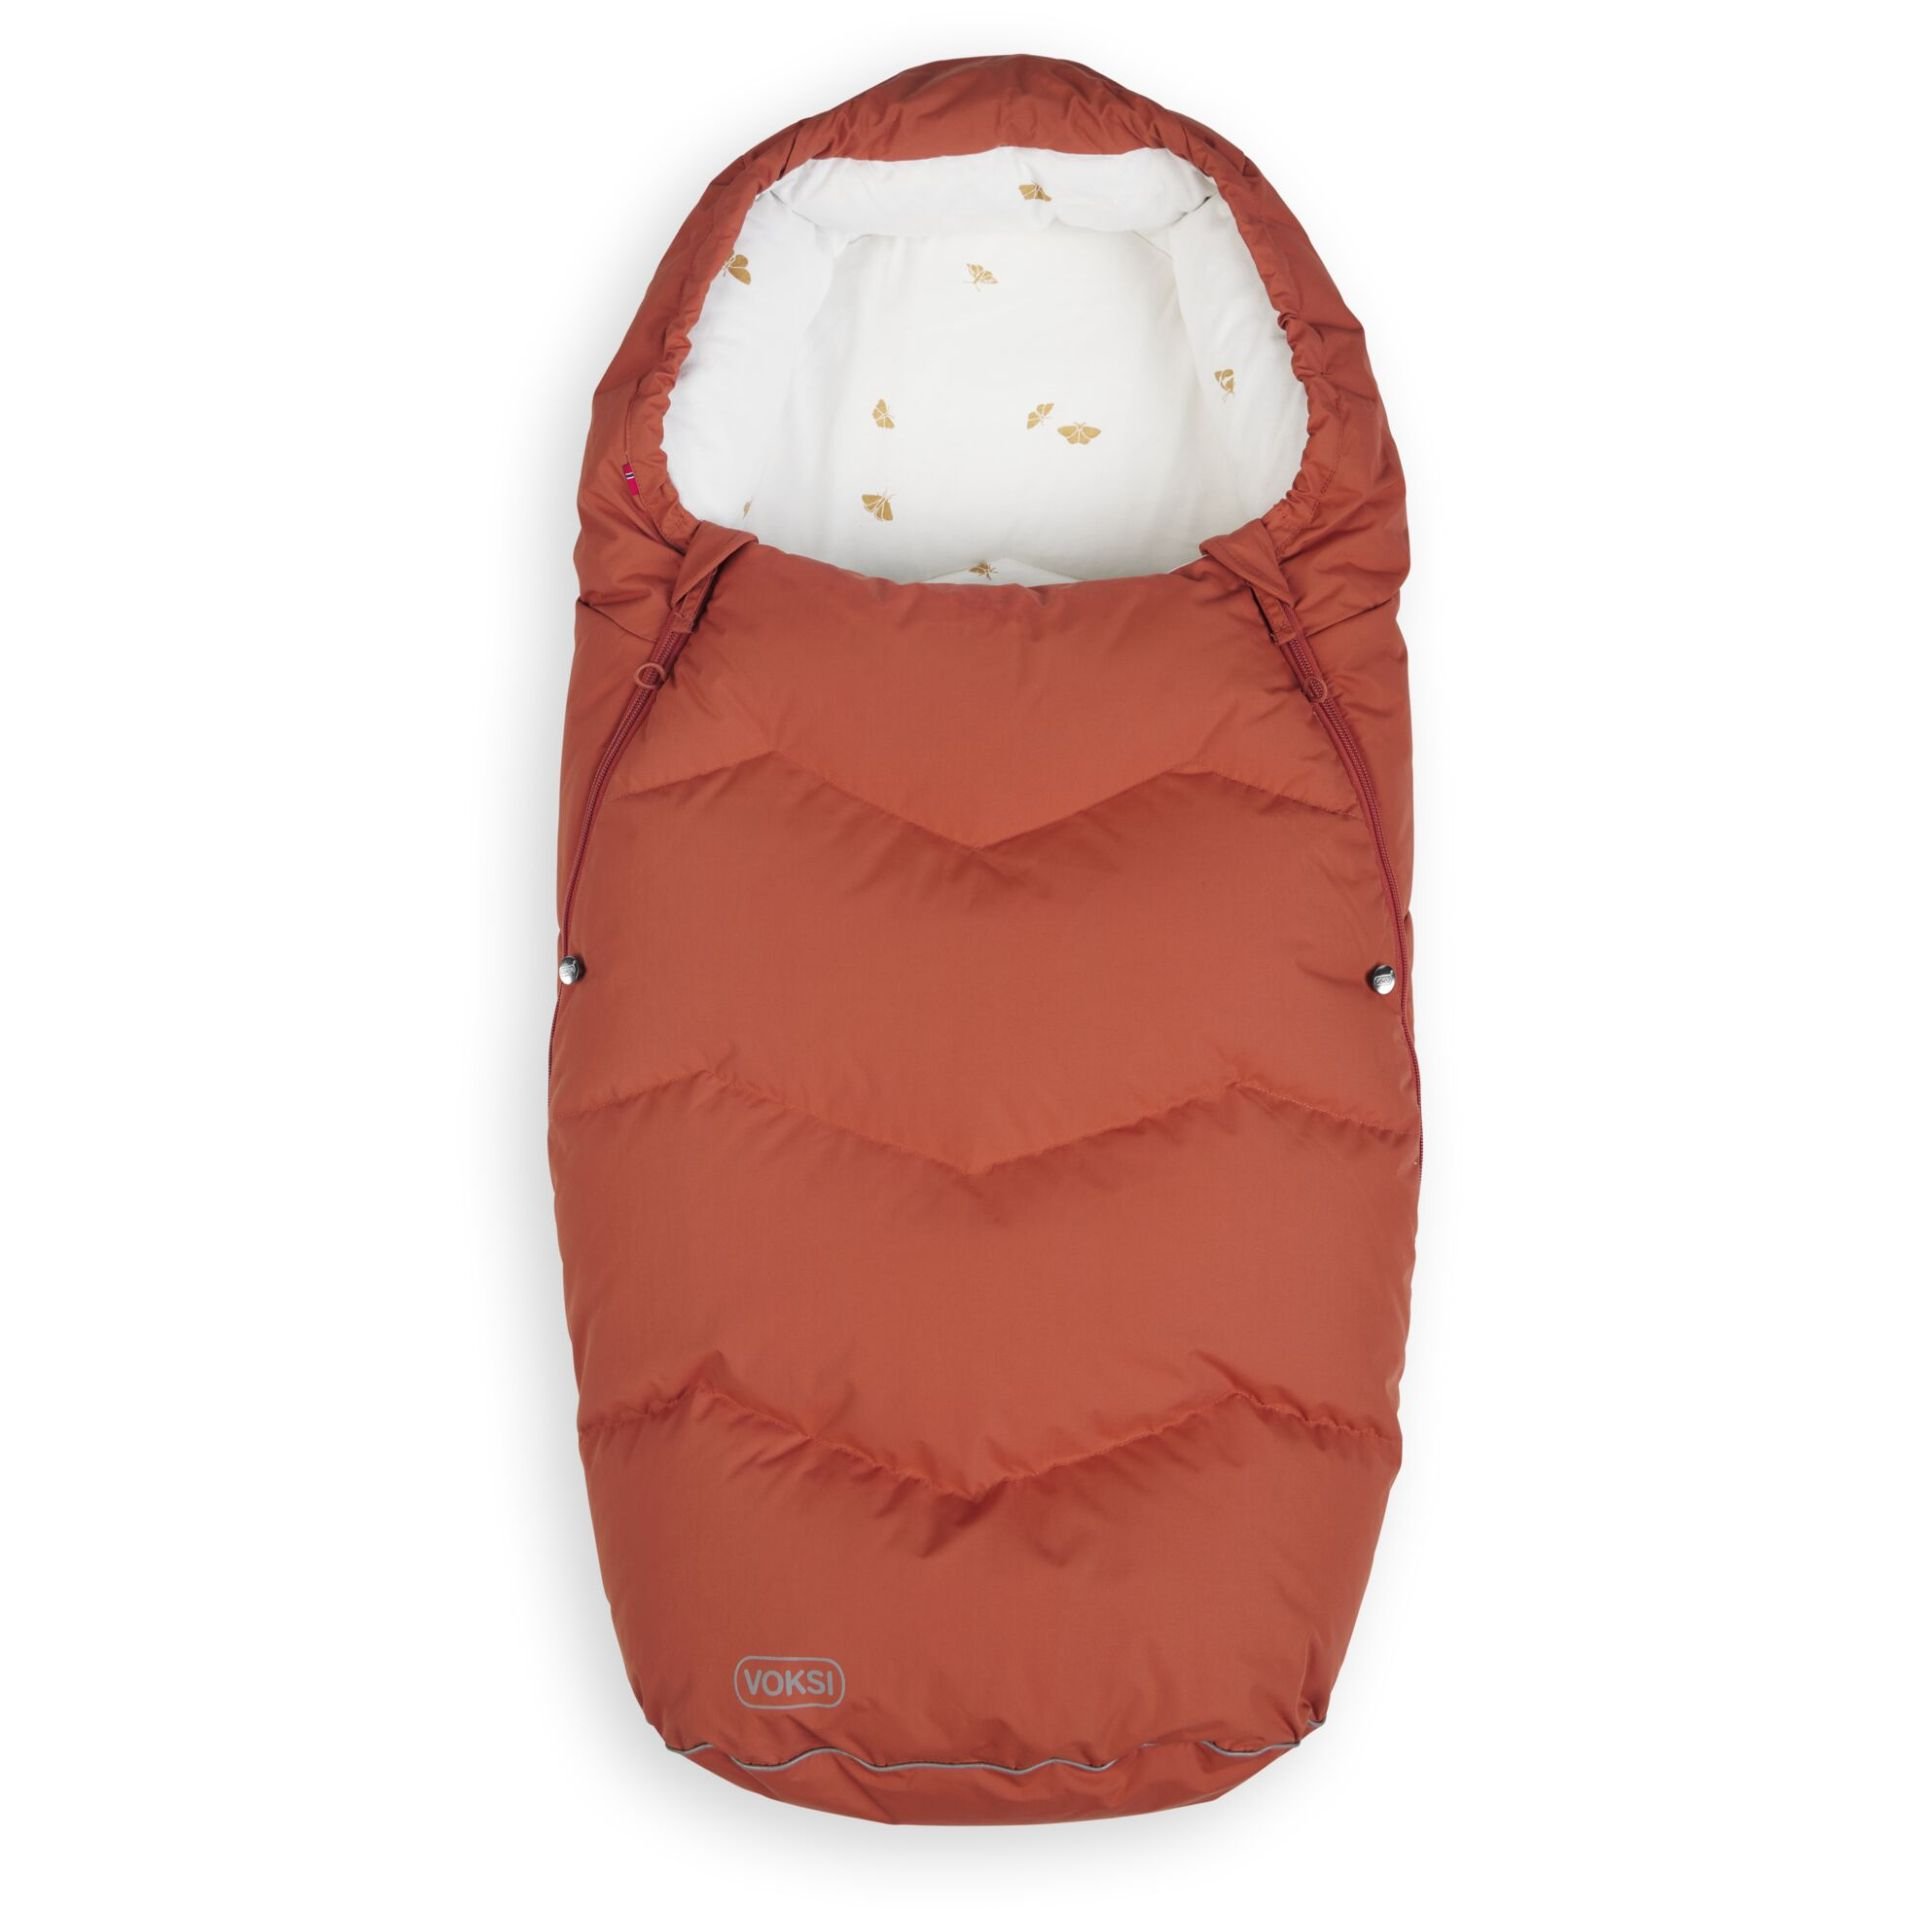 Voksi Urban: High quality baby sleeping bag for on the go